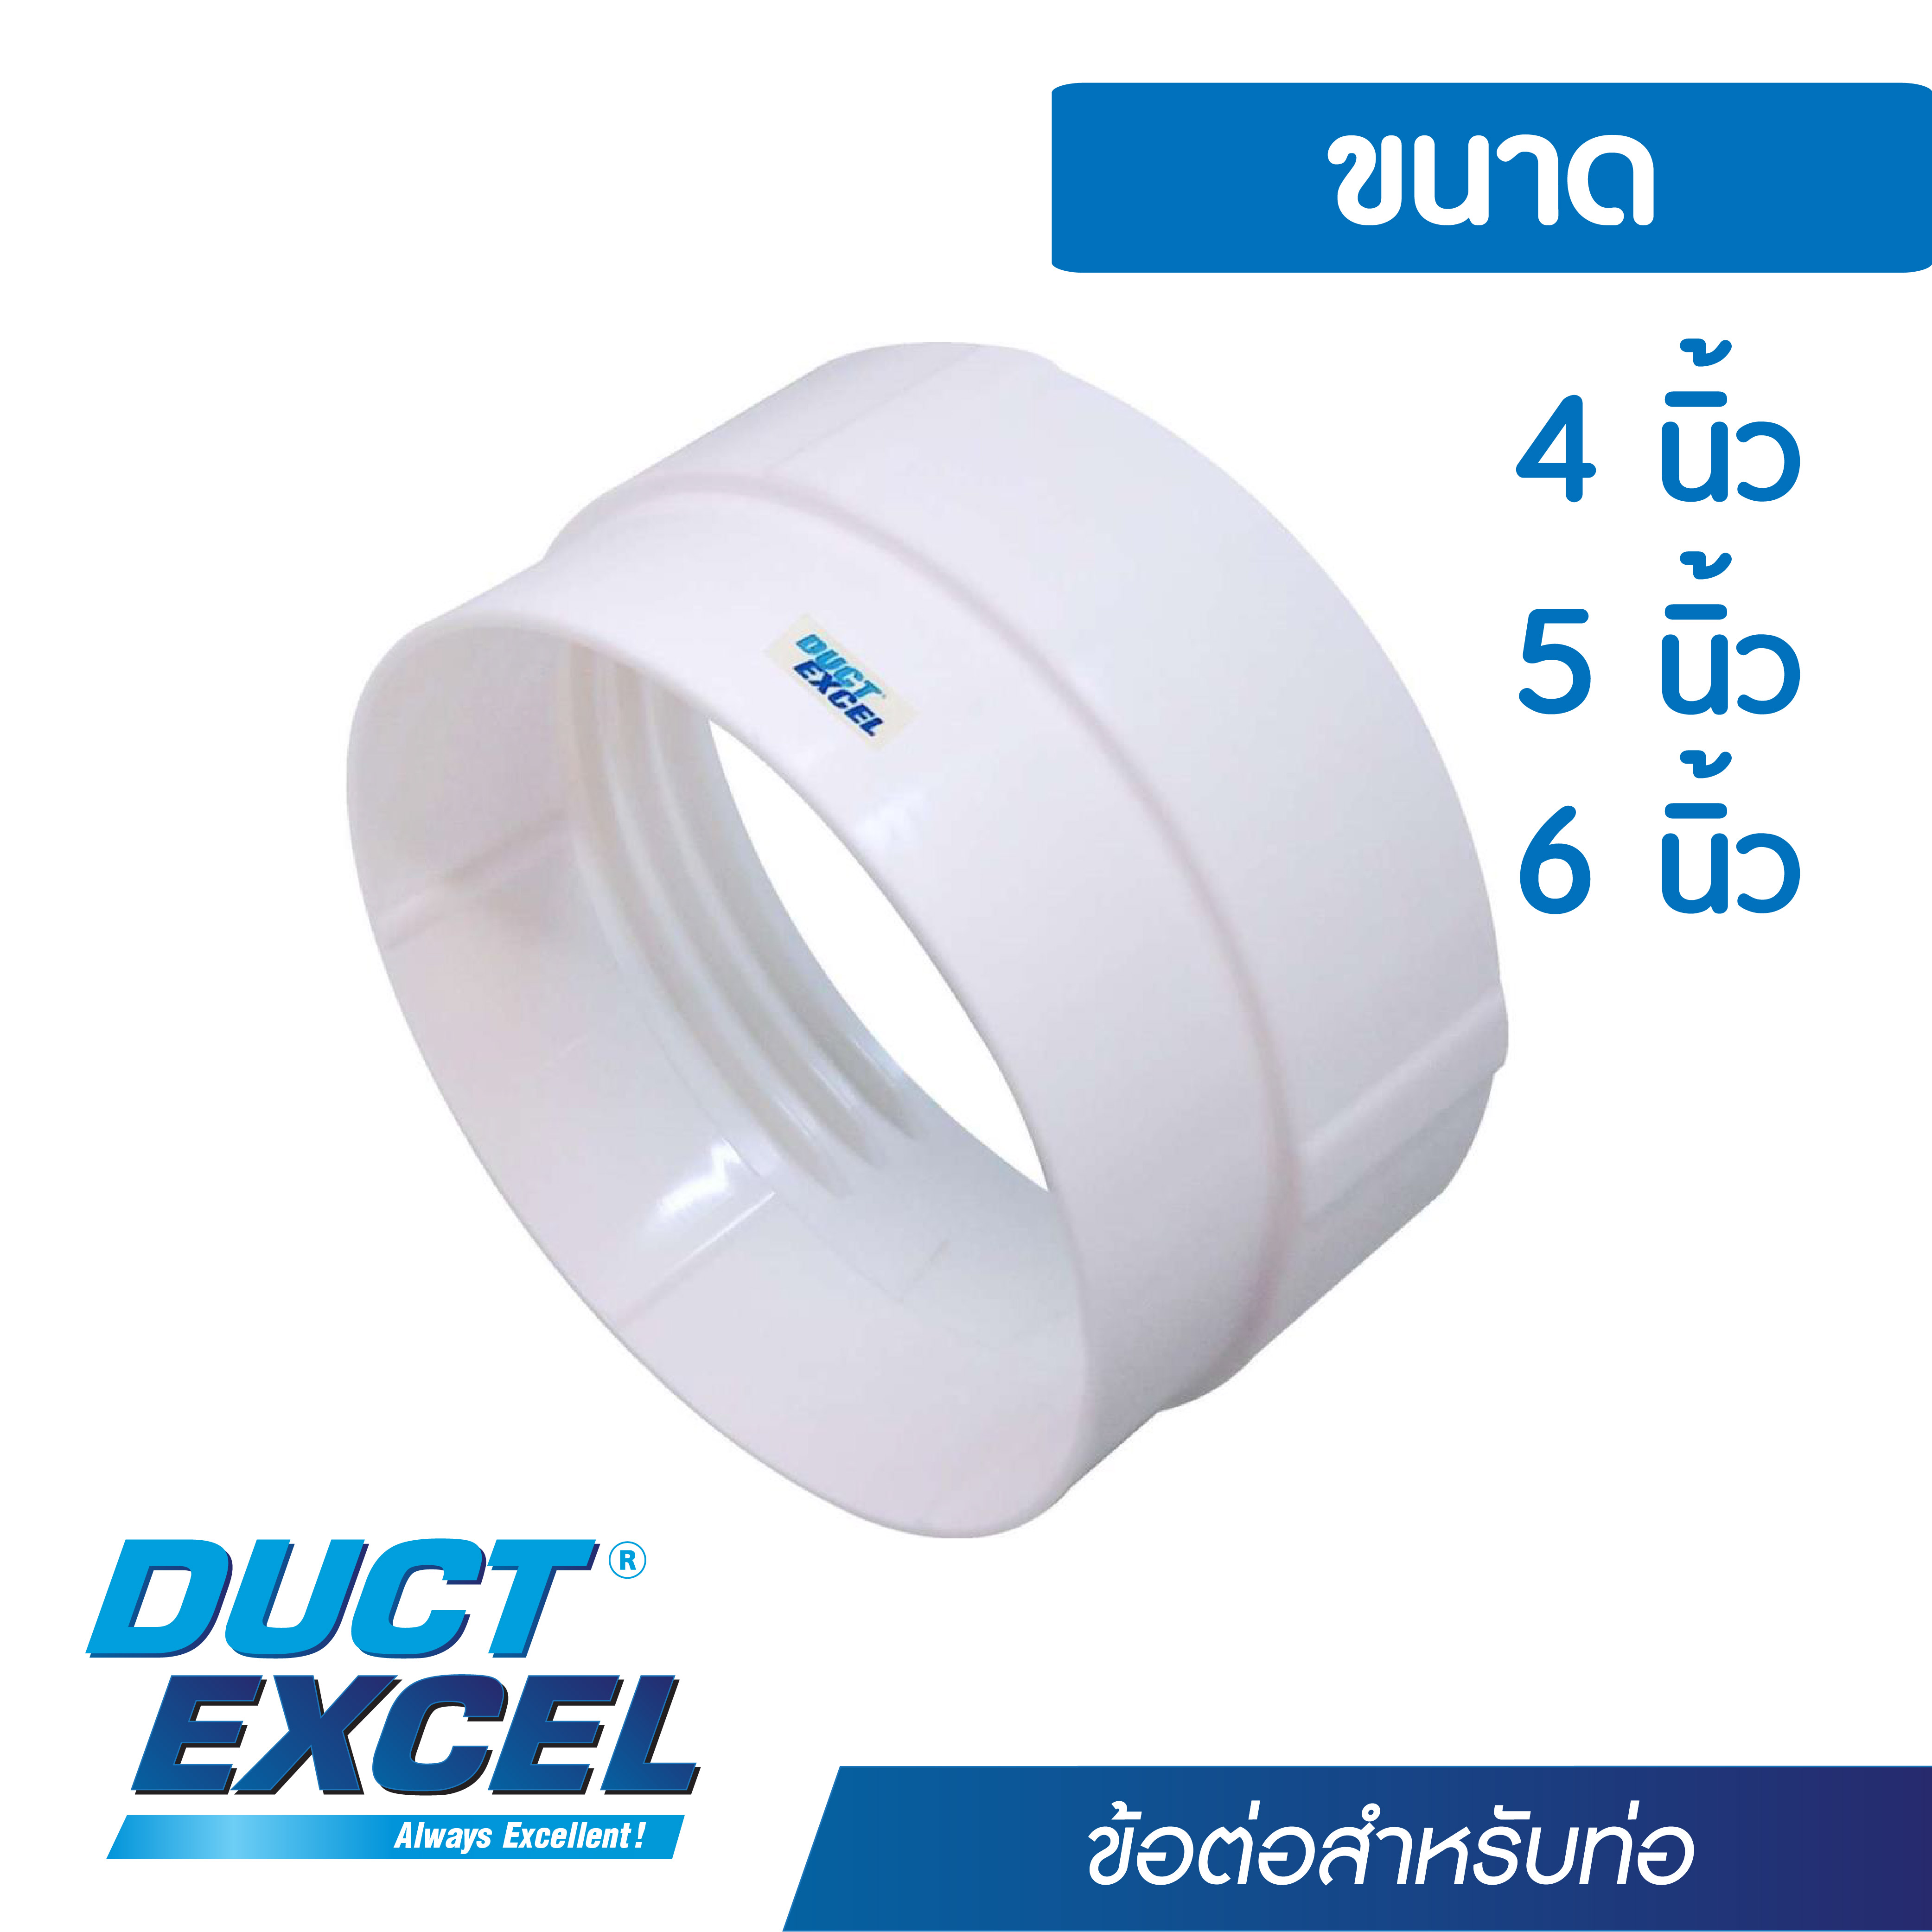 Duct Excel ข้อต่อ สำหรับใช้กับท่อขนาด 4นิ้ว 5นิ้ว 6นิ้ว